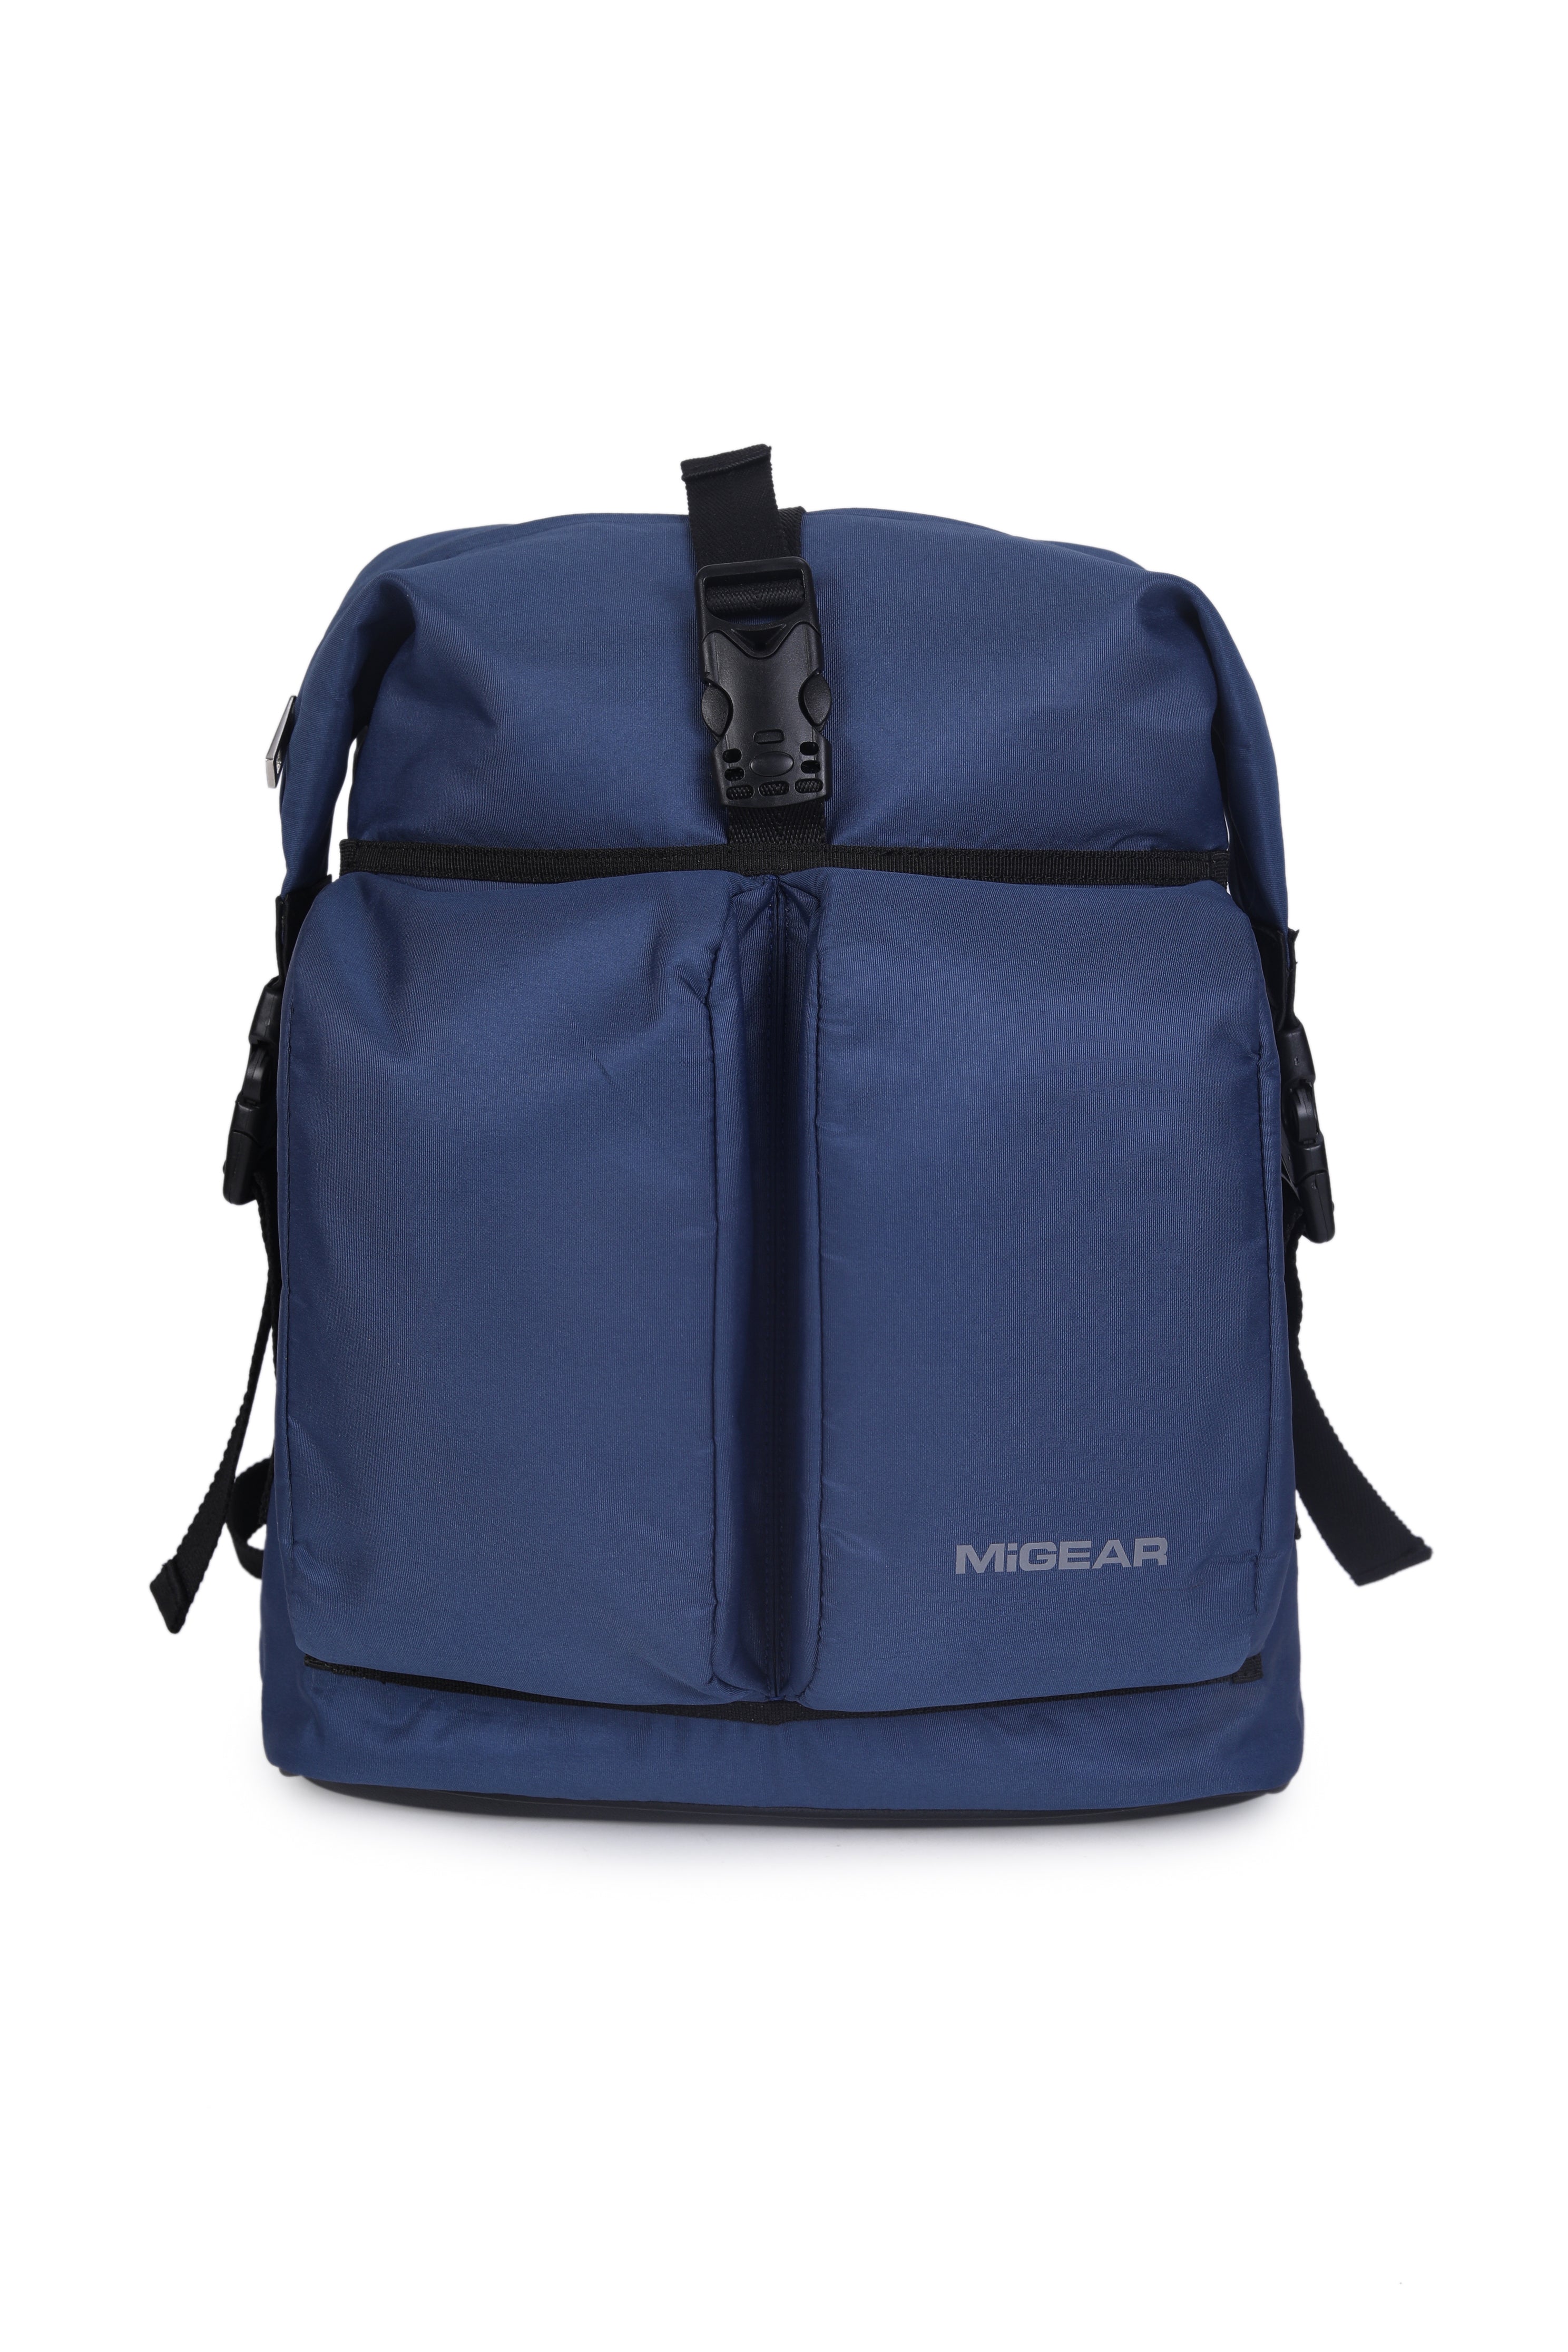 NomadKnapsack Backpack